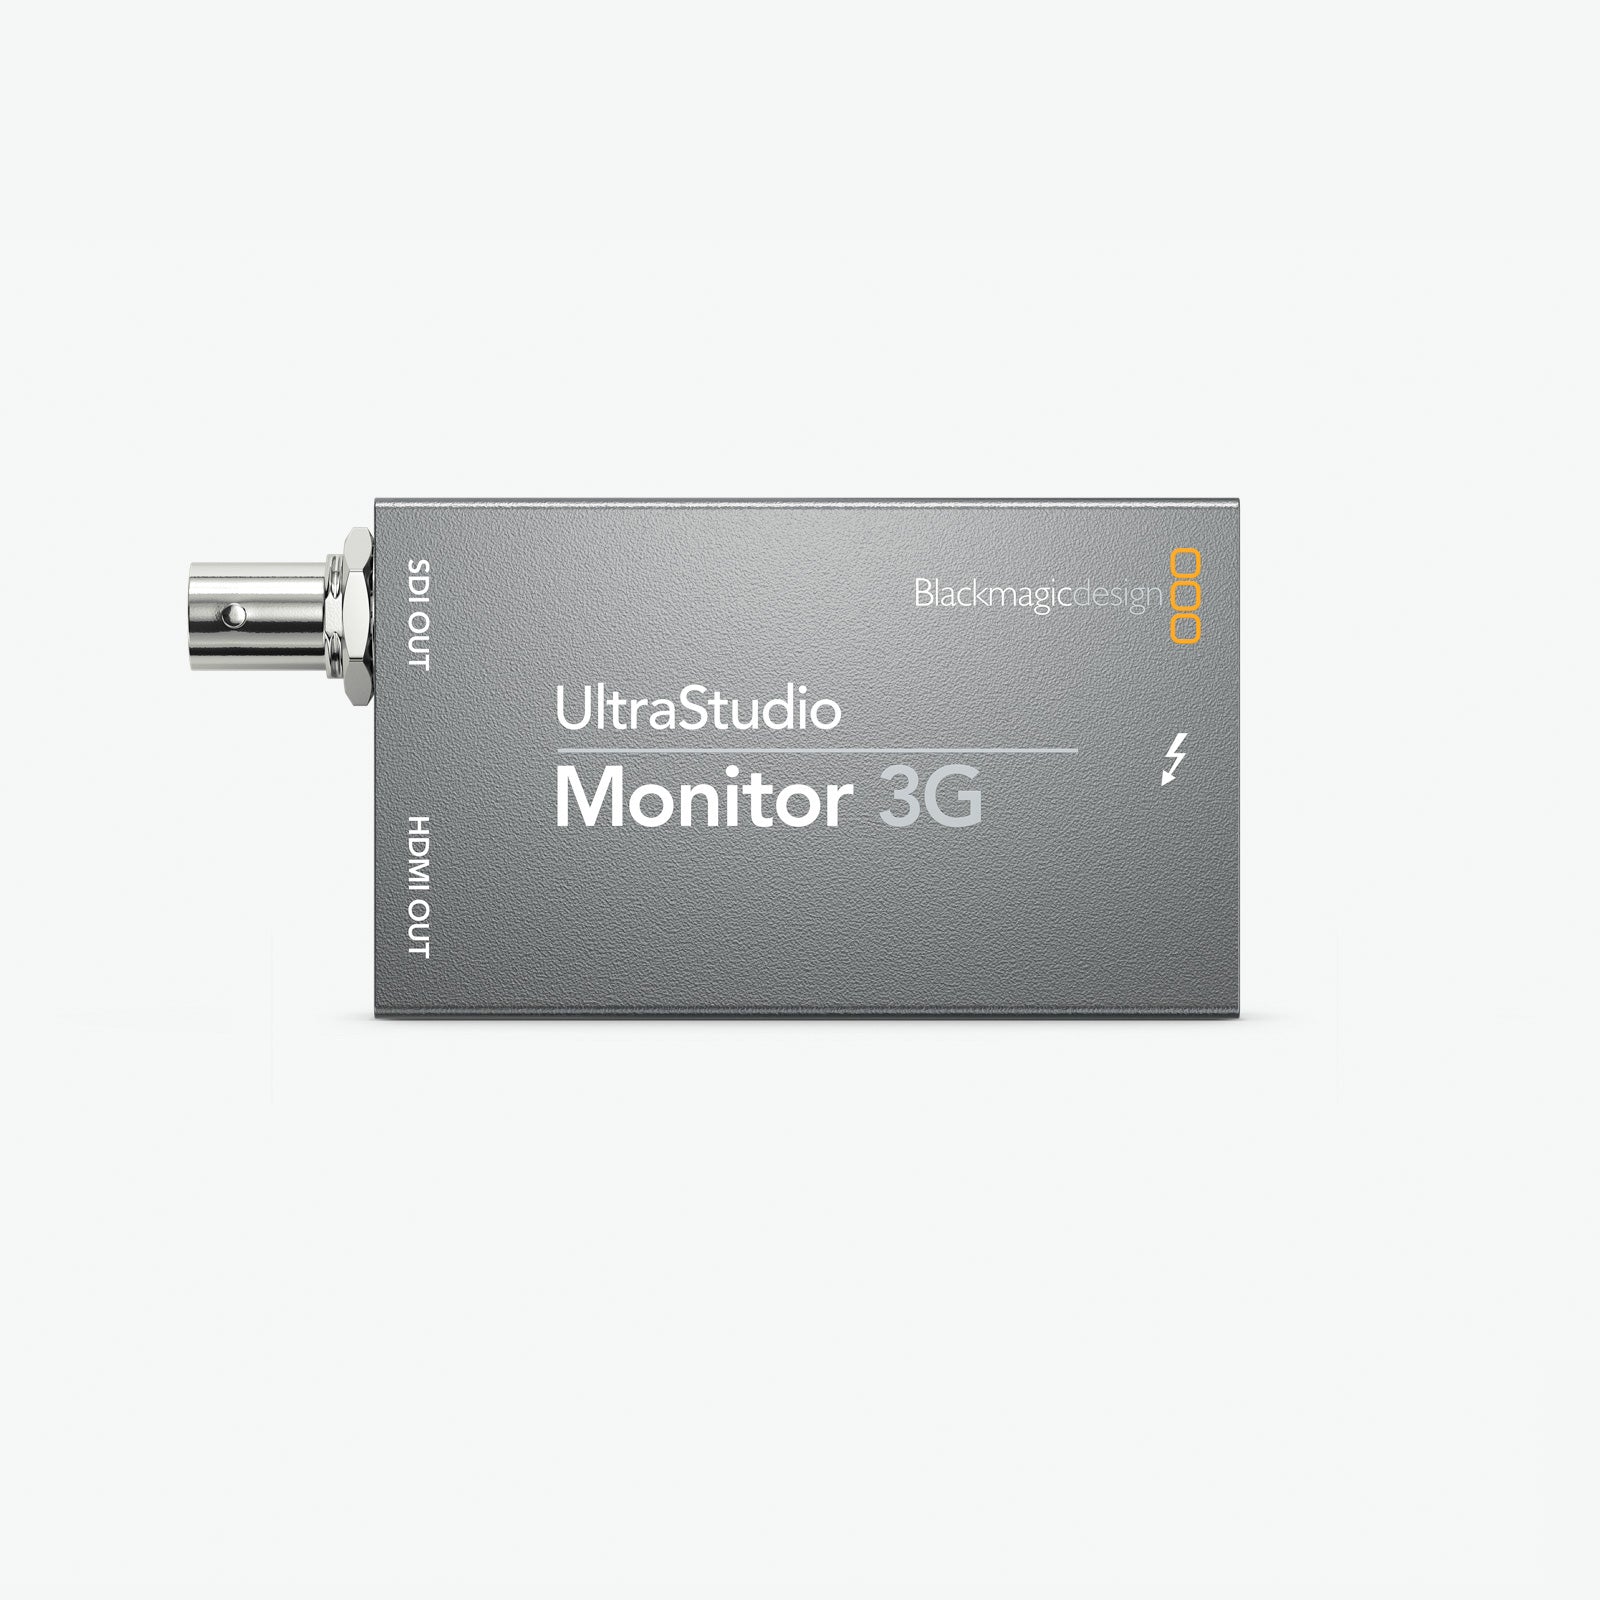 Blackmagic Design(ブラックマジックデザイン) UltraStudio Monitor 3G BDLKULSDMBREC3G